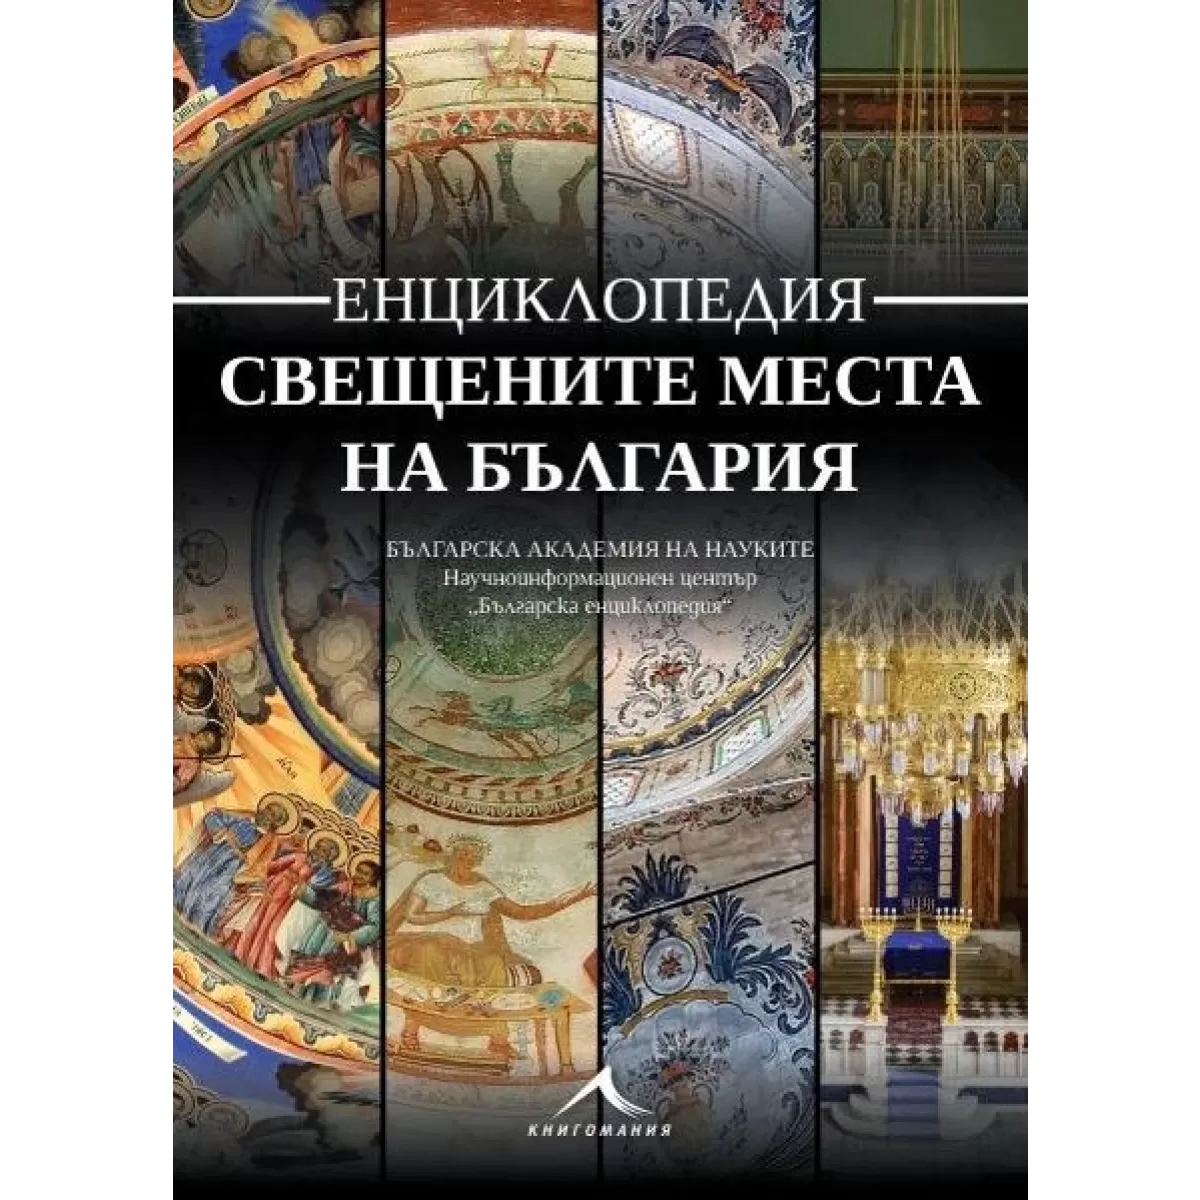 Свещените места на България Енциклопедия